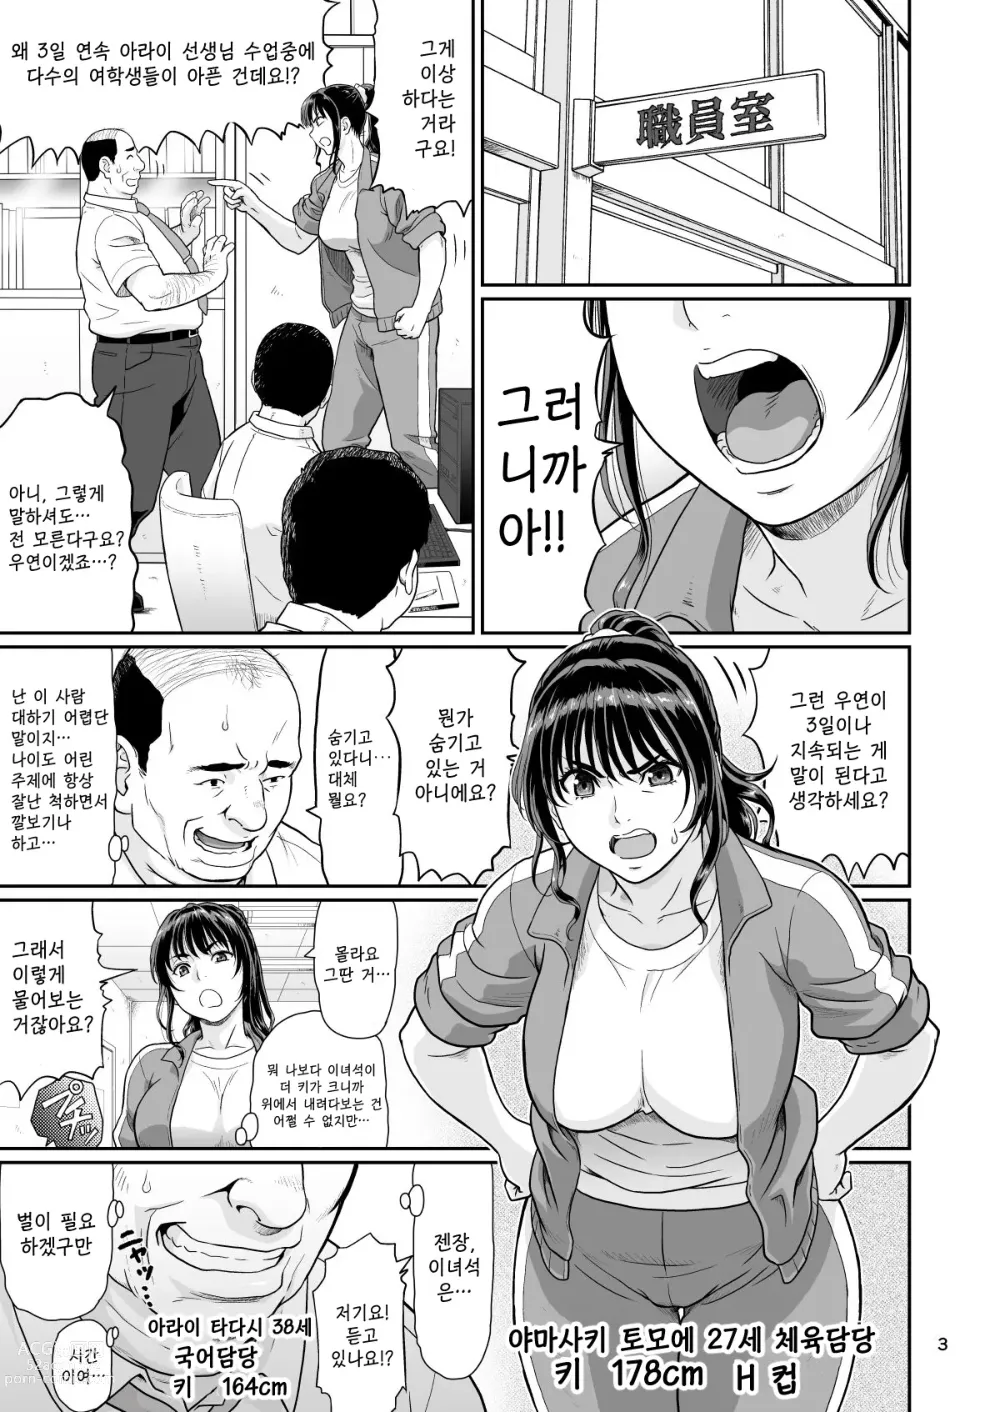 Page 3 of doujinshi 야한 짓 이외에 시간을 멈춰선 안된다구요 2